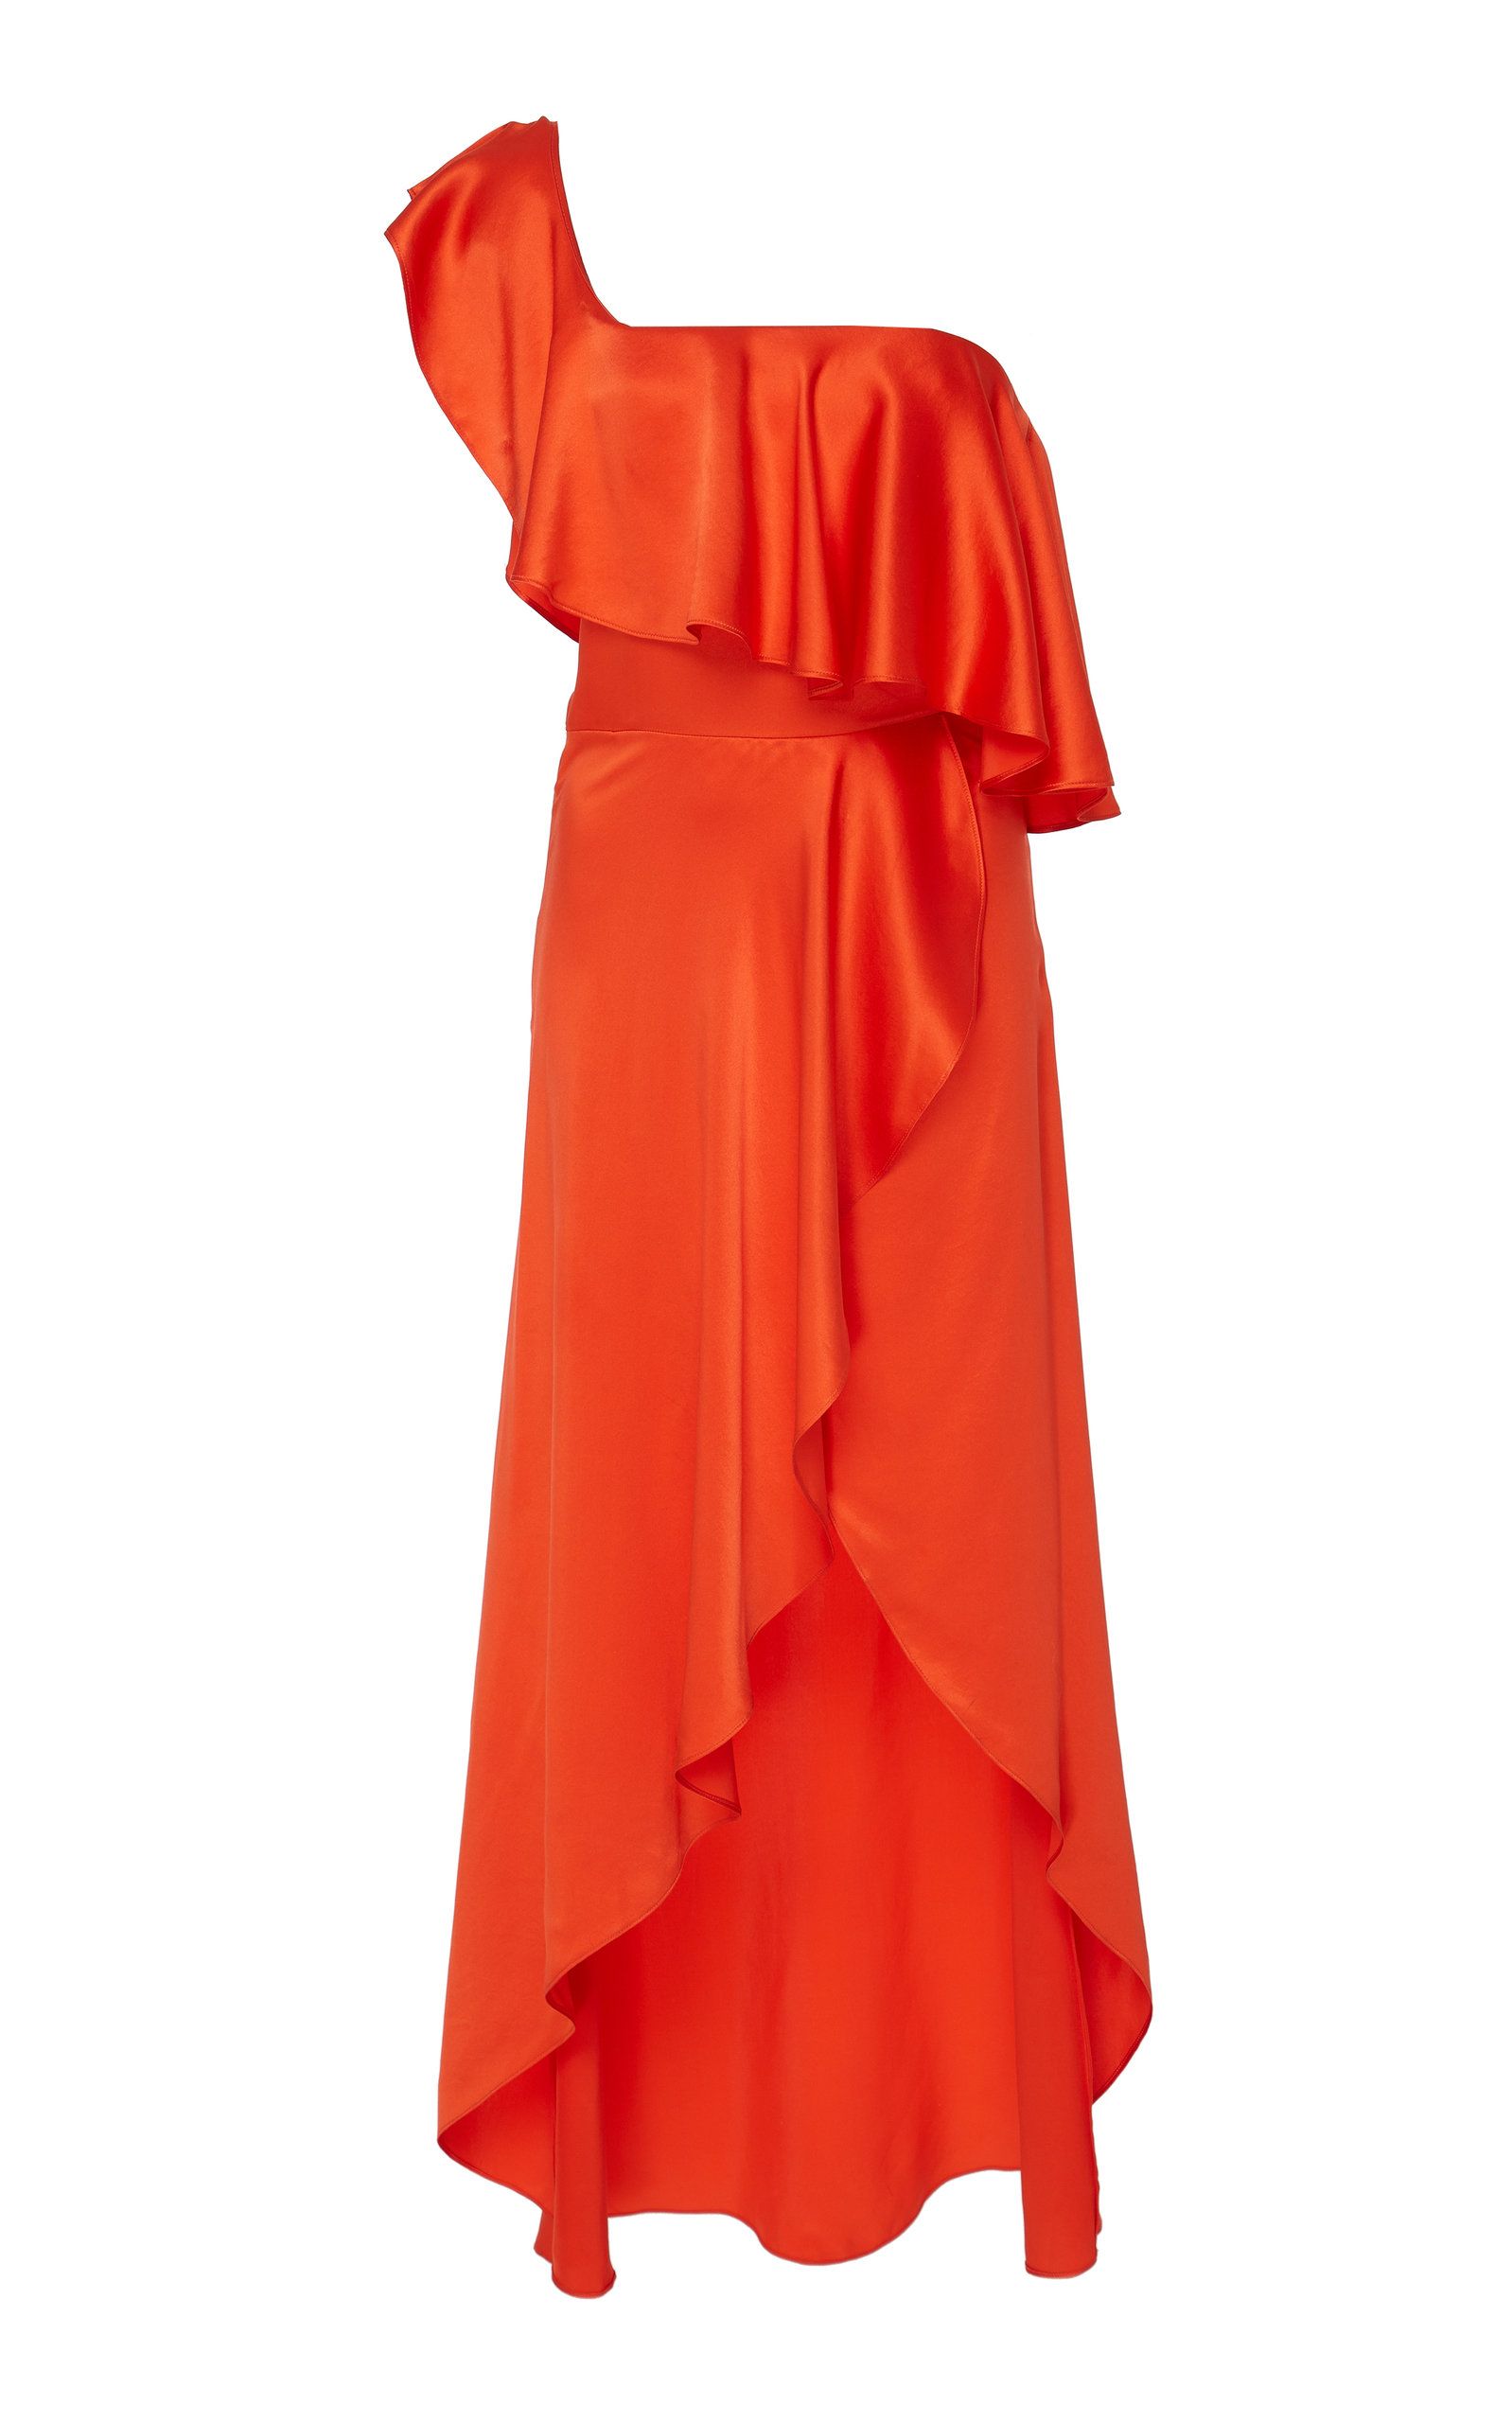 Kylie Jenner Pre-Grammys Gala Dress - Kylie Jenner Wore a Red Dress ...